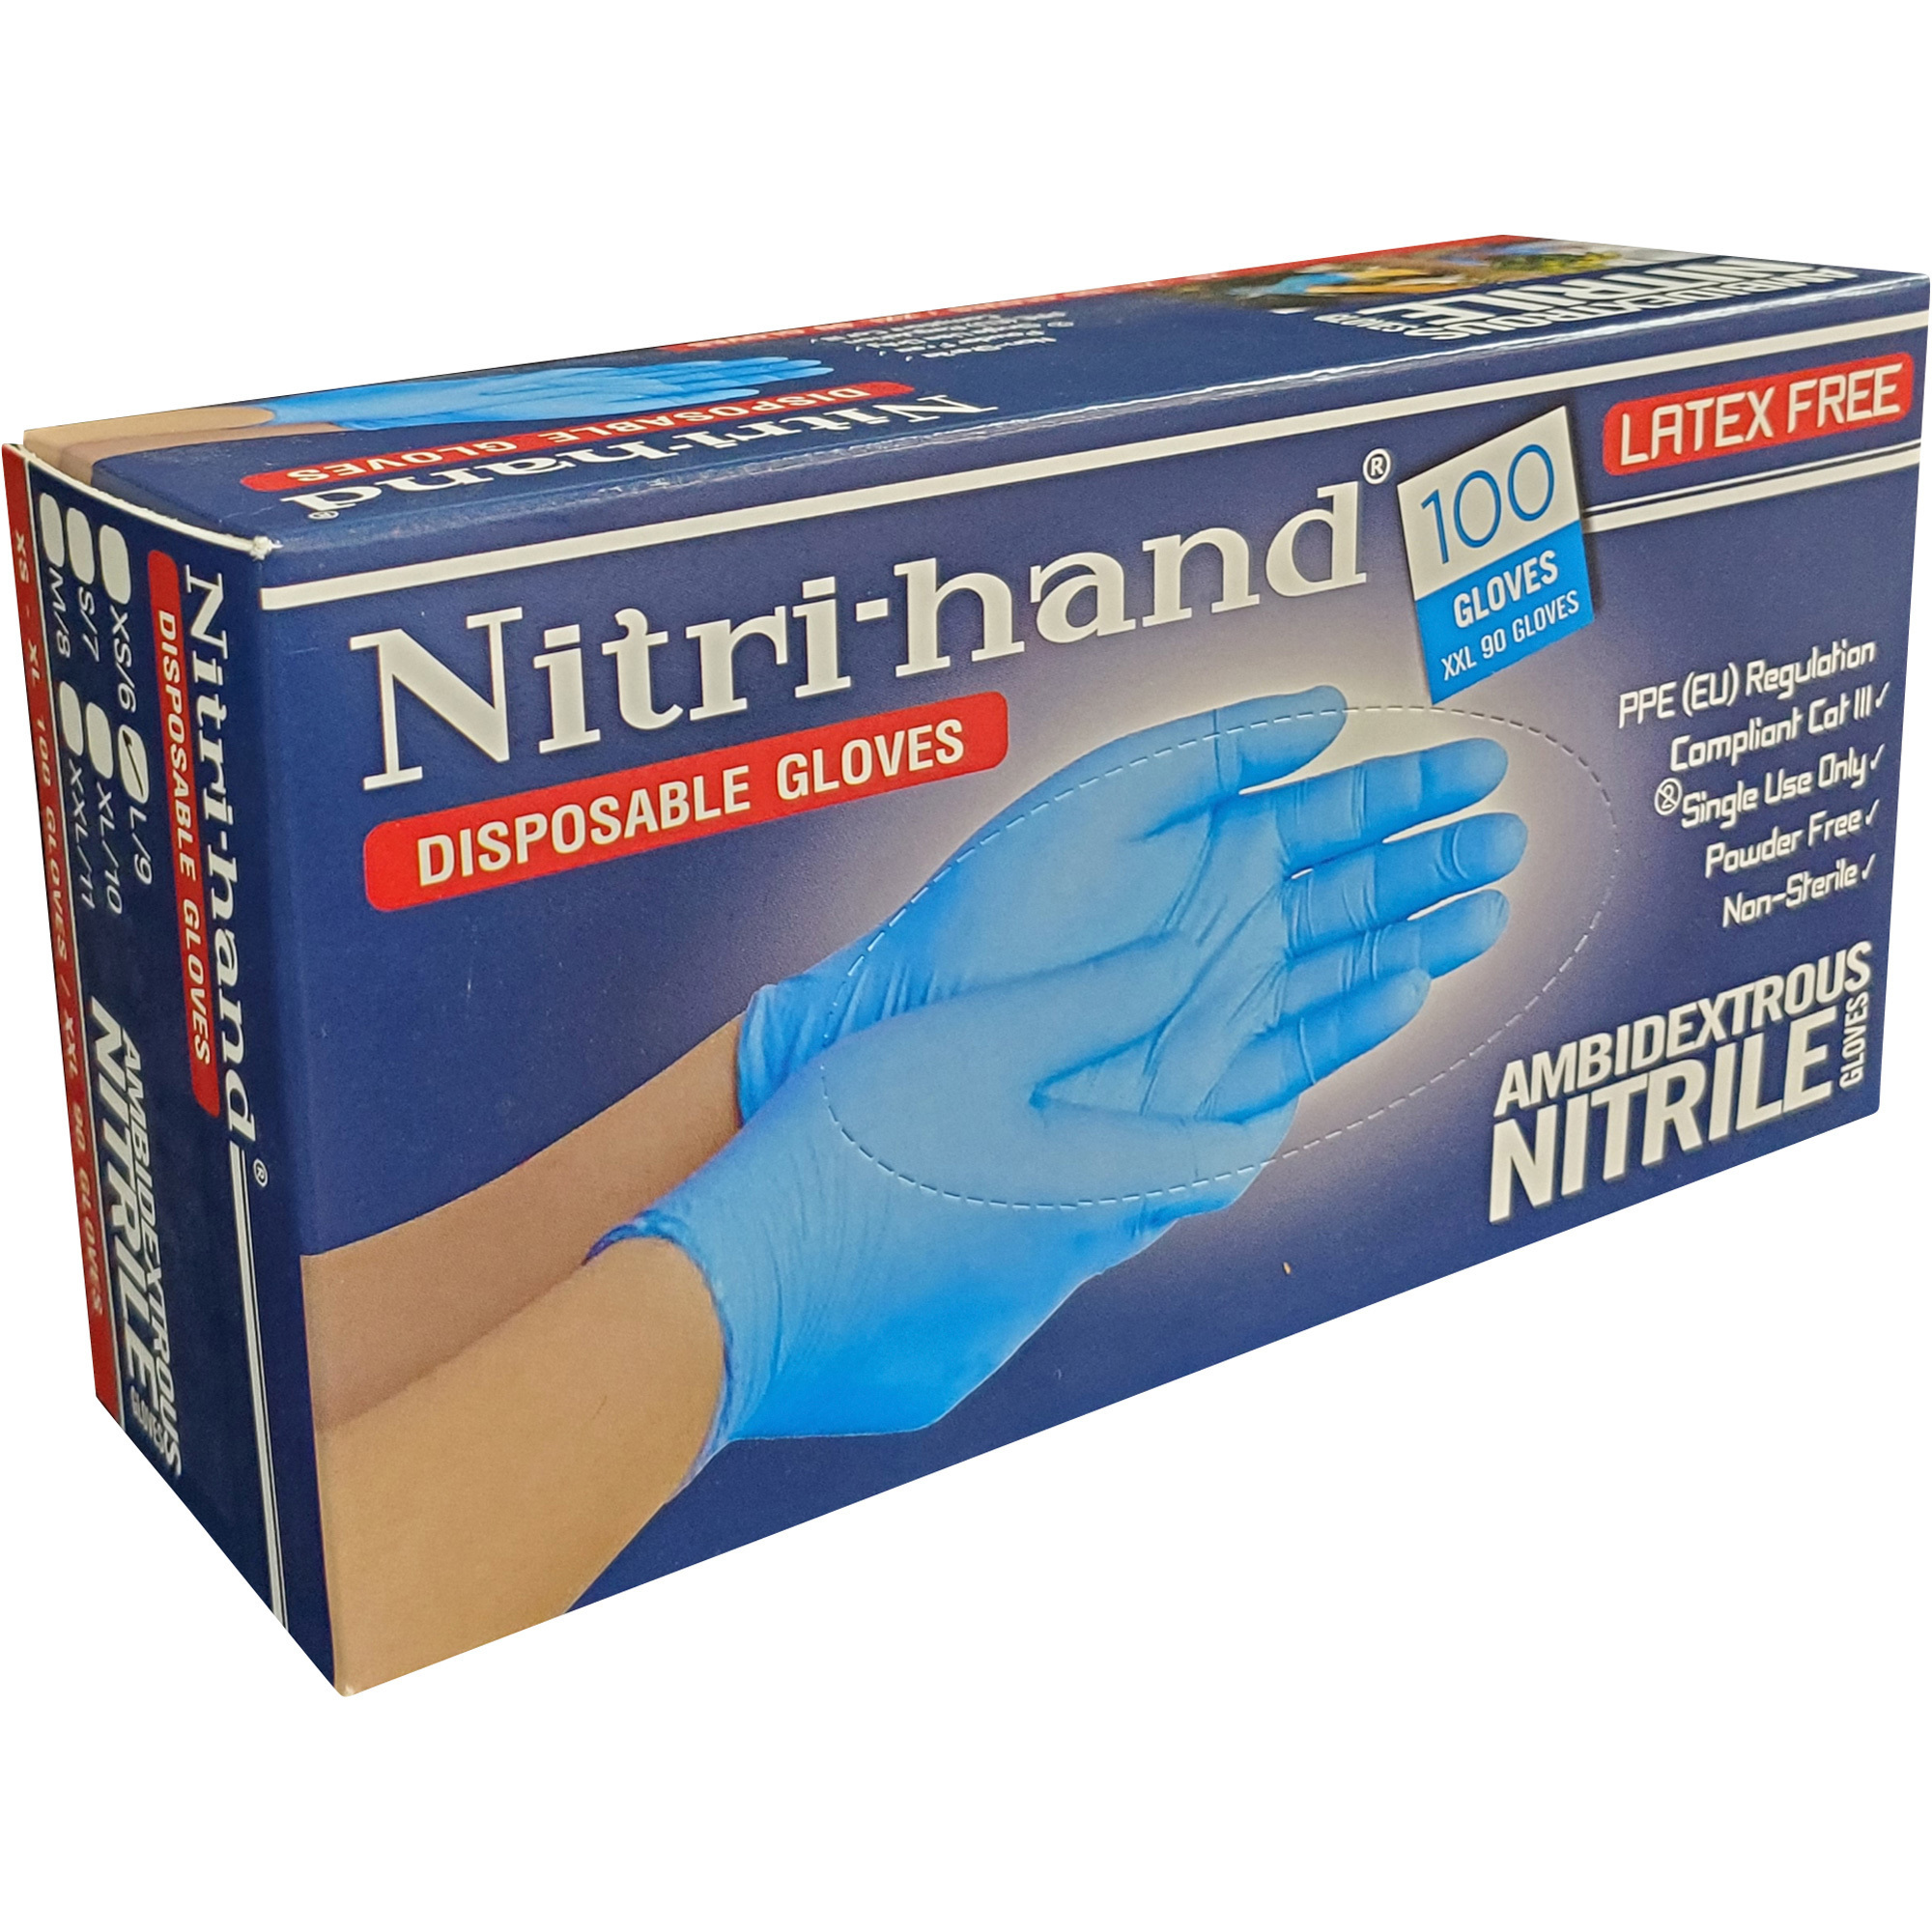 Global Glove Nitri-hand Disposable Nitrile Gloves, 1,000 Gloves, Blue, XL, Model E705PFE-XL